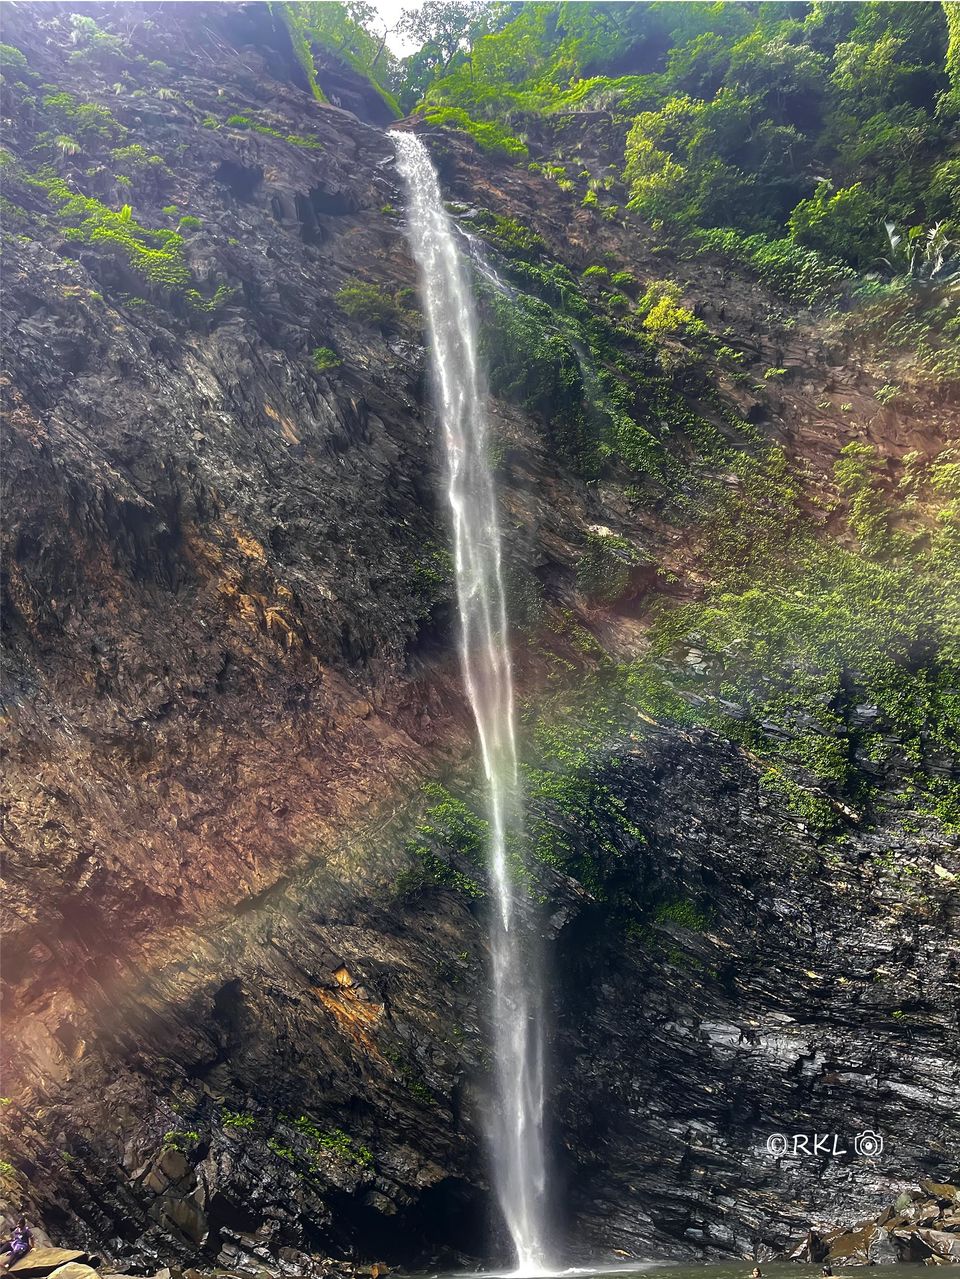 Photo of Koodlutheertha Falls, Nadpal by Lokesh R Kumar